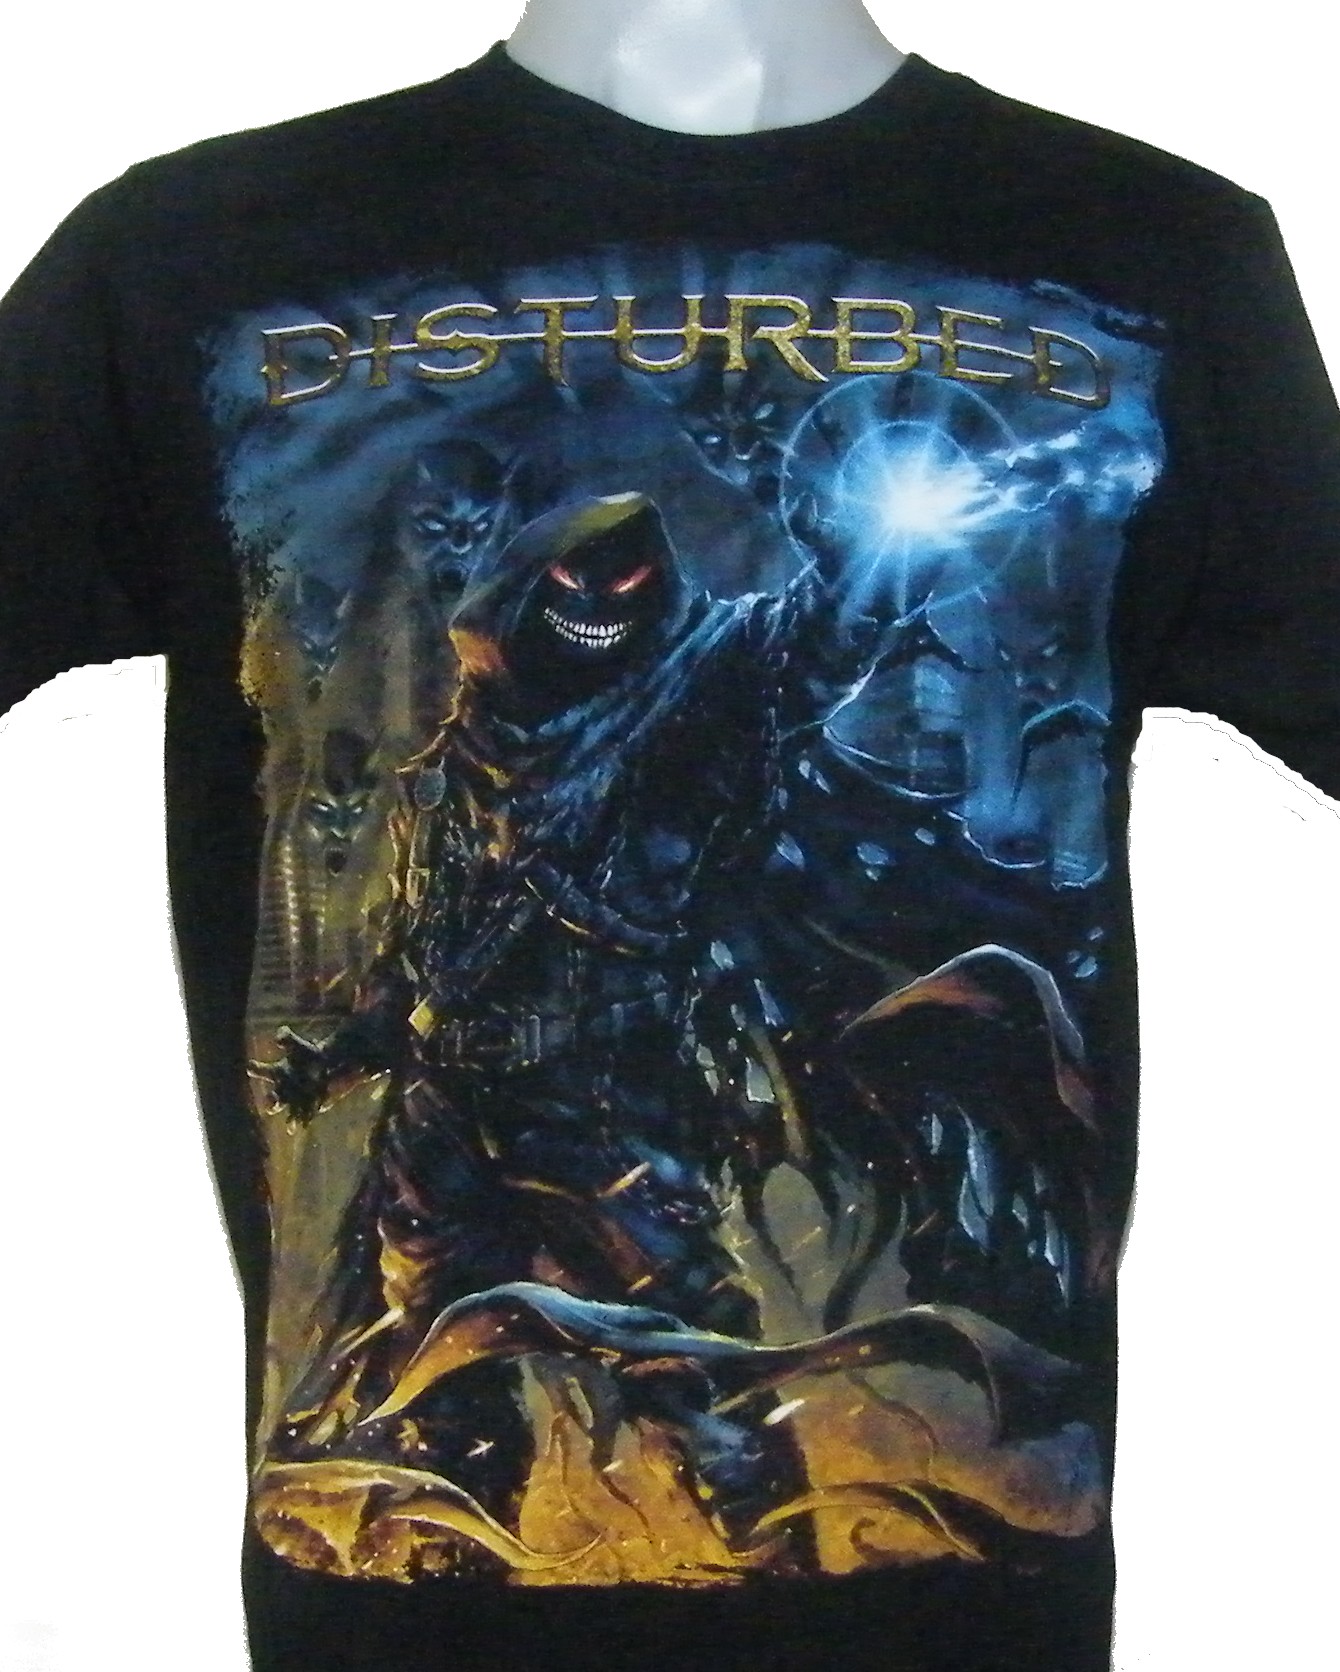 Disturbed t-shirt size XXXL – RoxxBKK